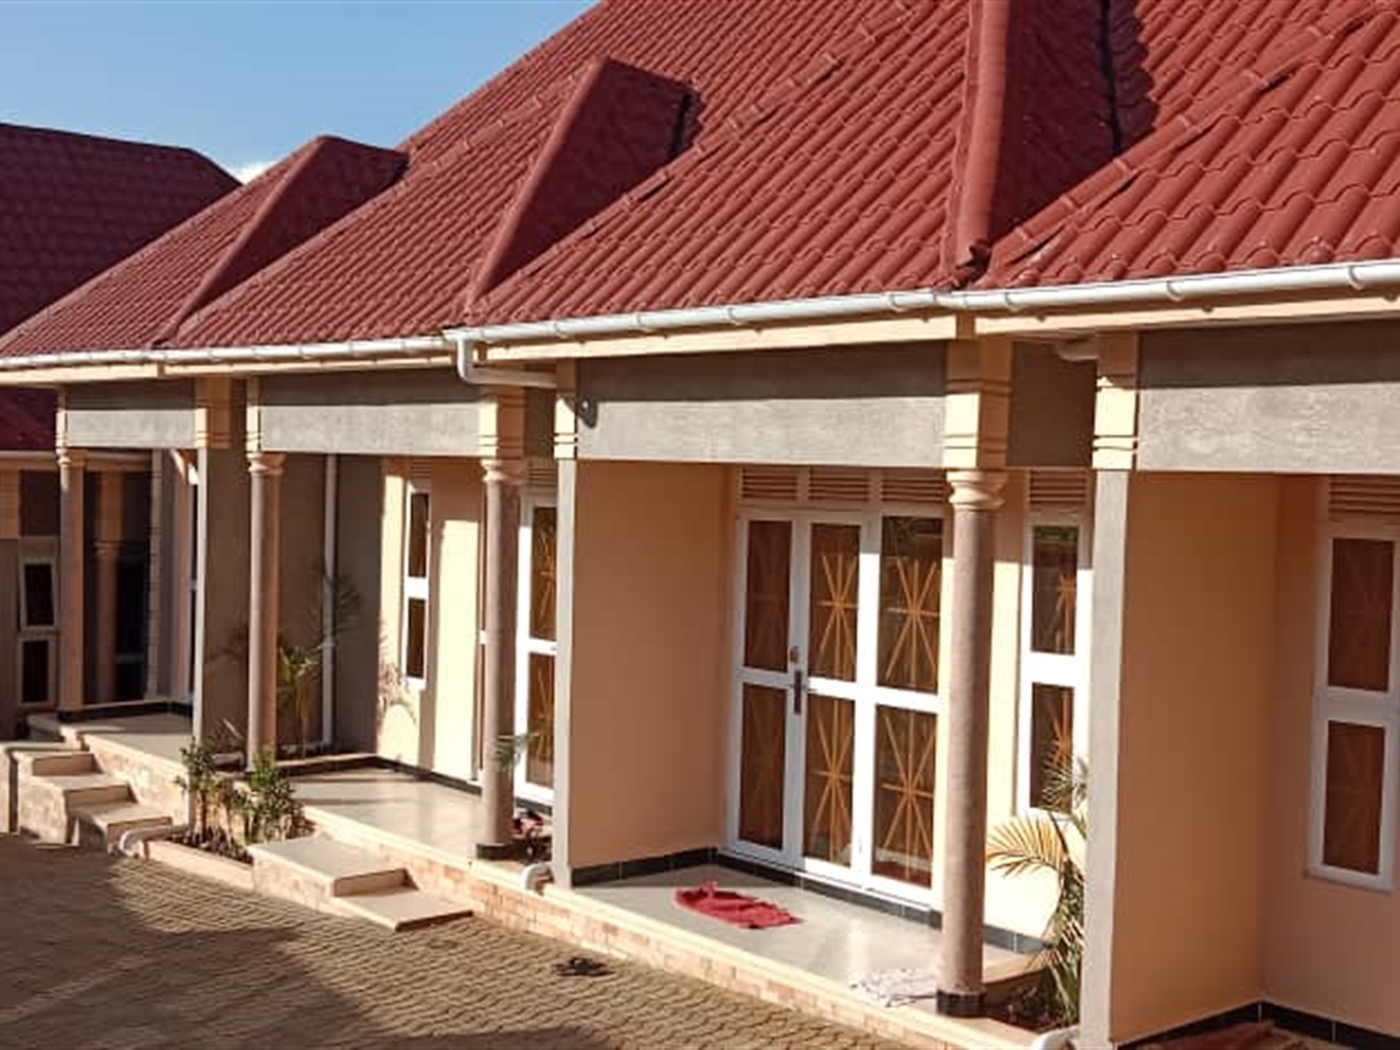 Rental units for sale in Kiwaatule Kampala